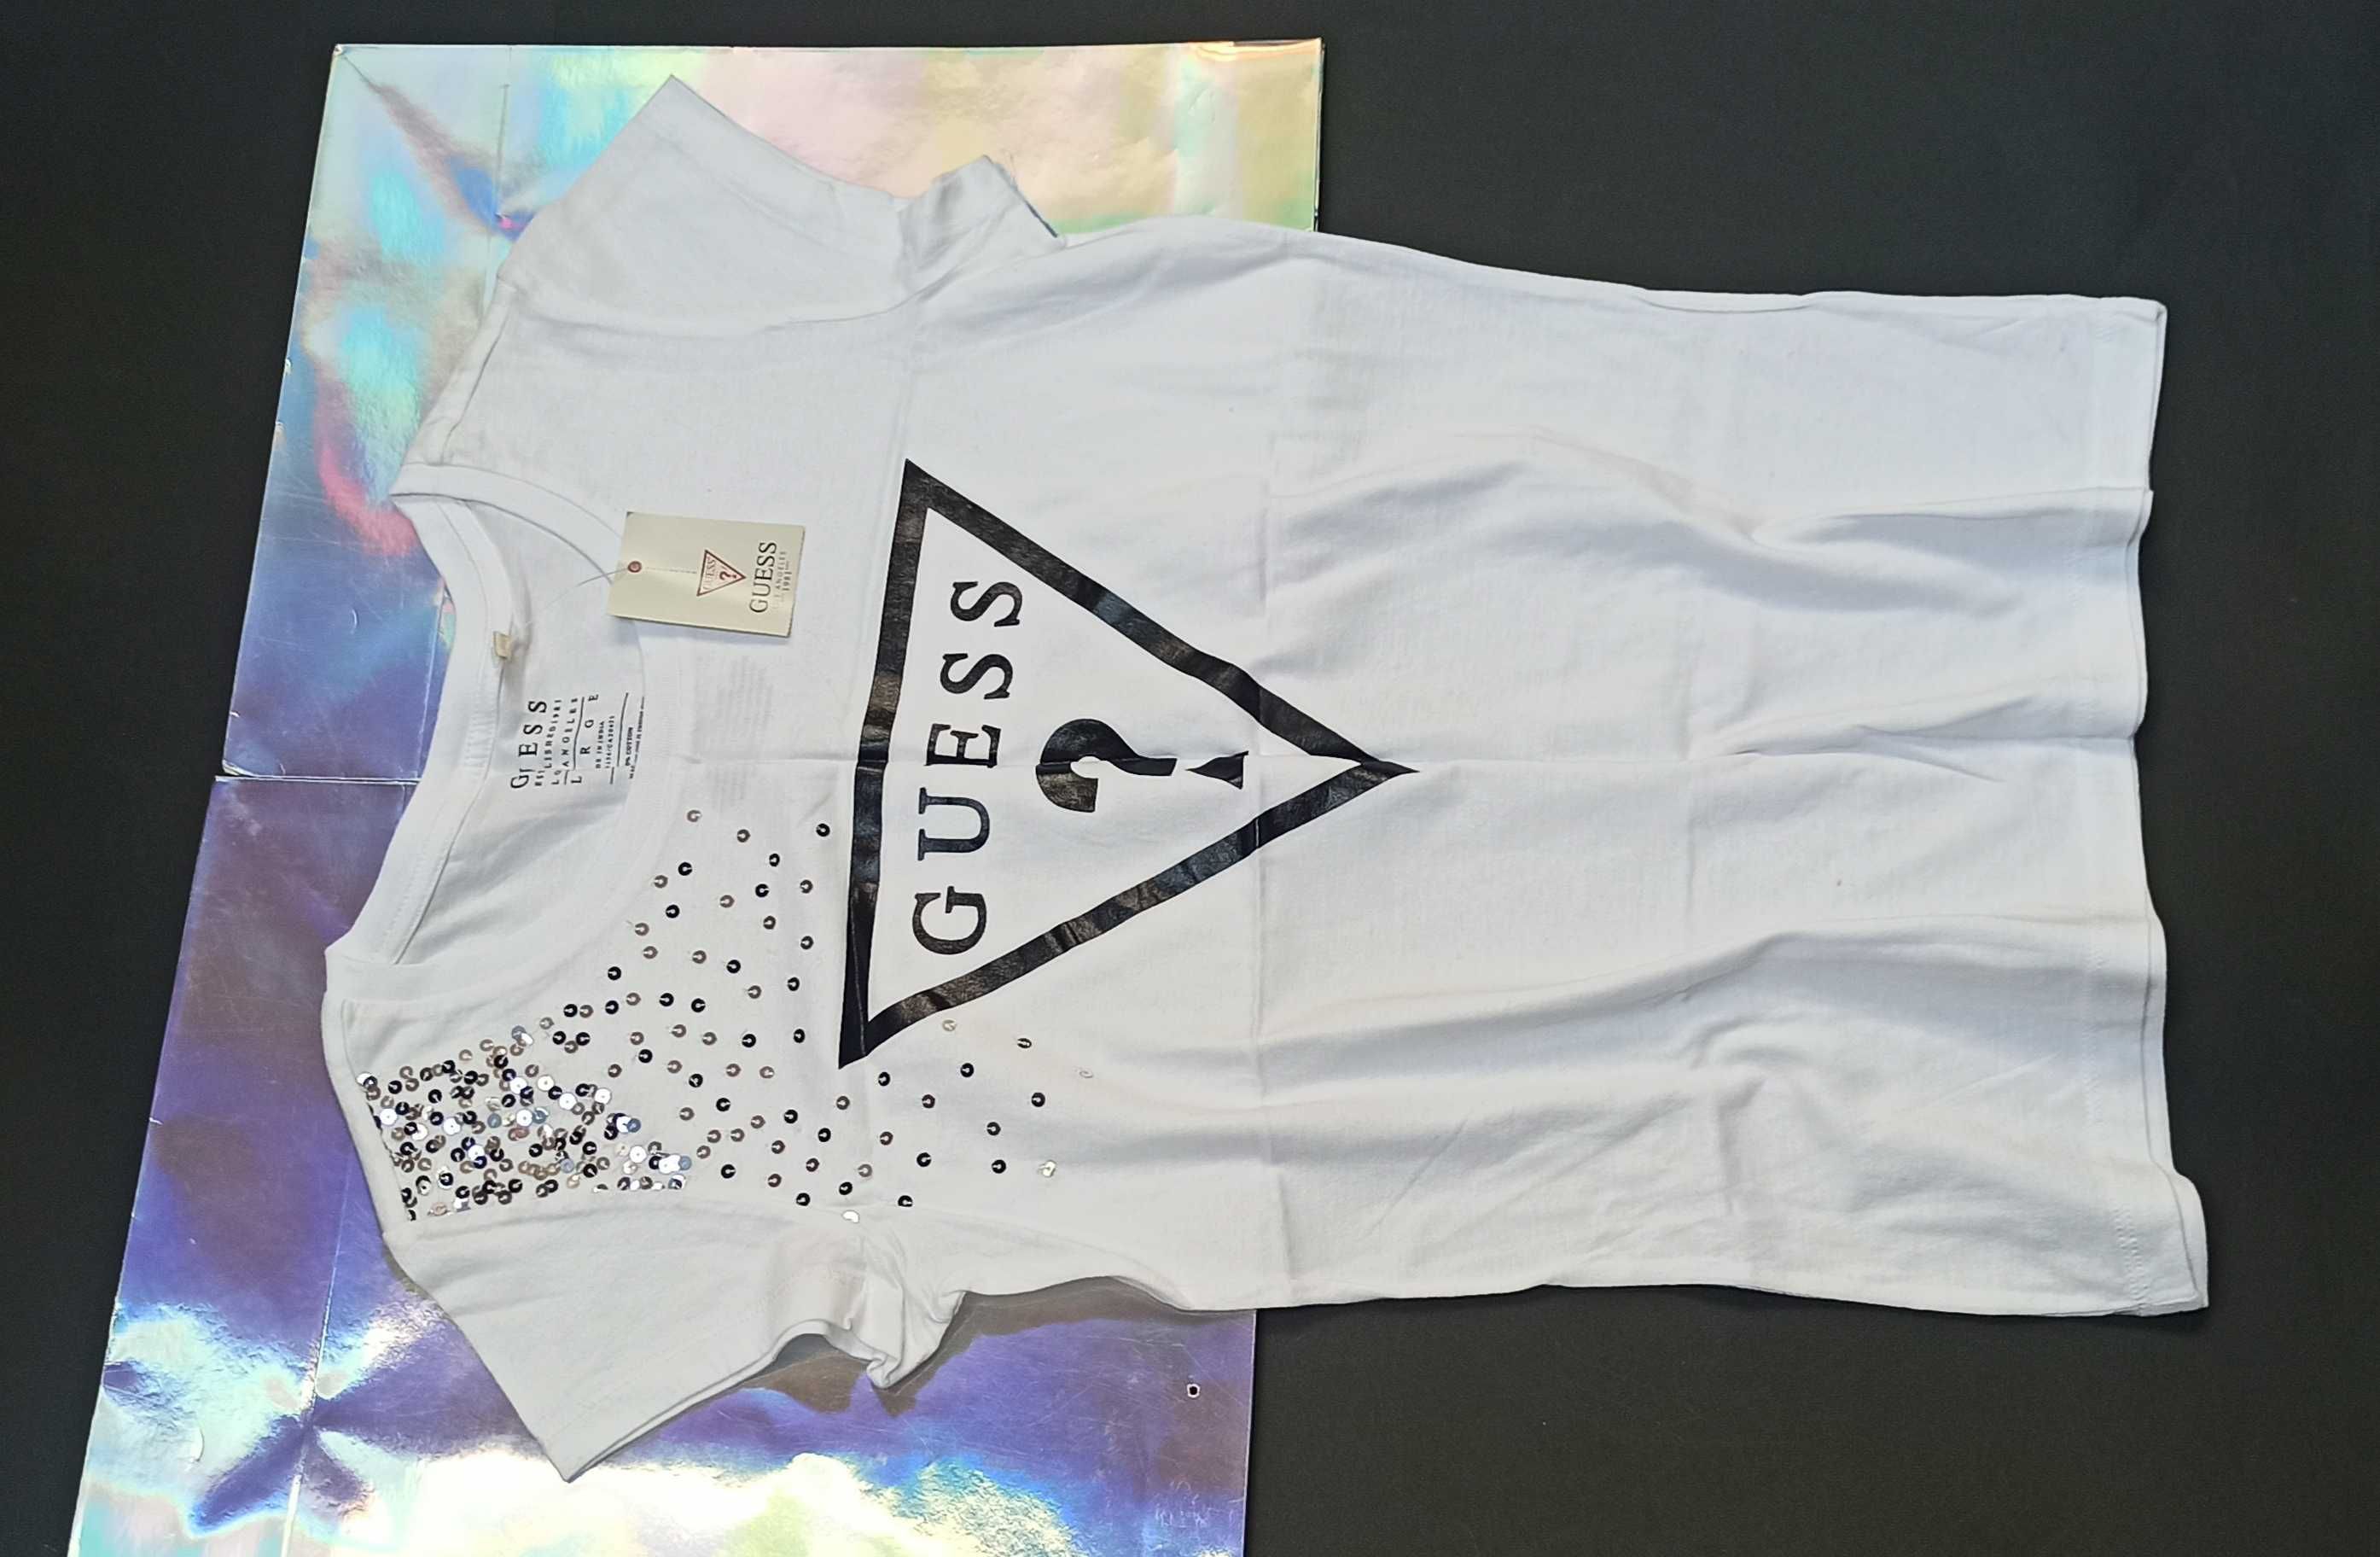 GUESS Oryginalna Koszulka T-Shirt Bluzka Sniezny Pyl Cekiny Confetti